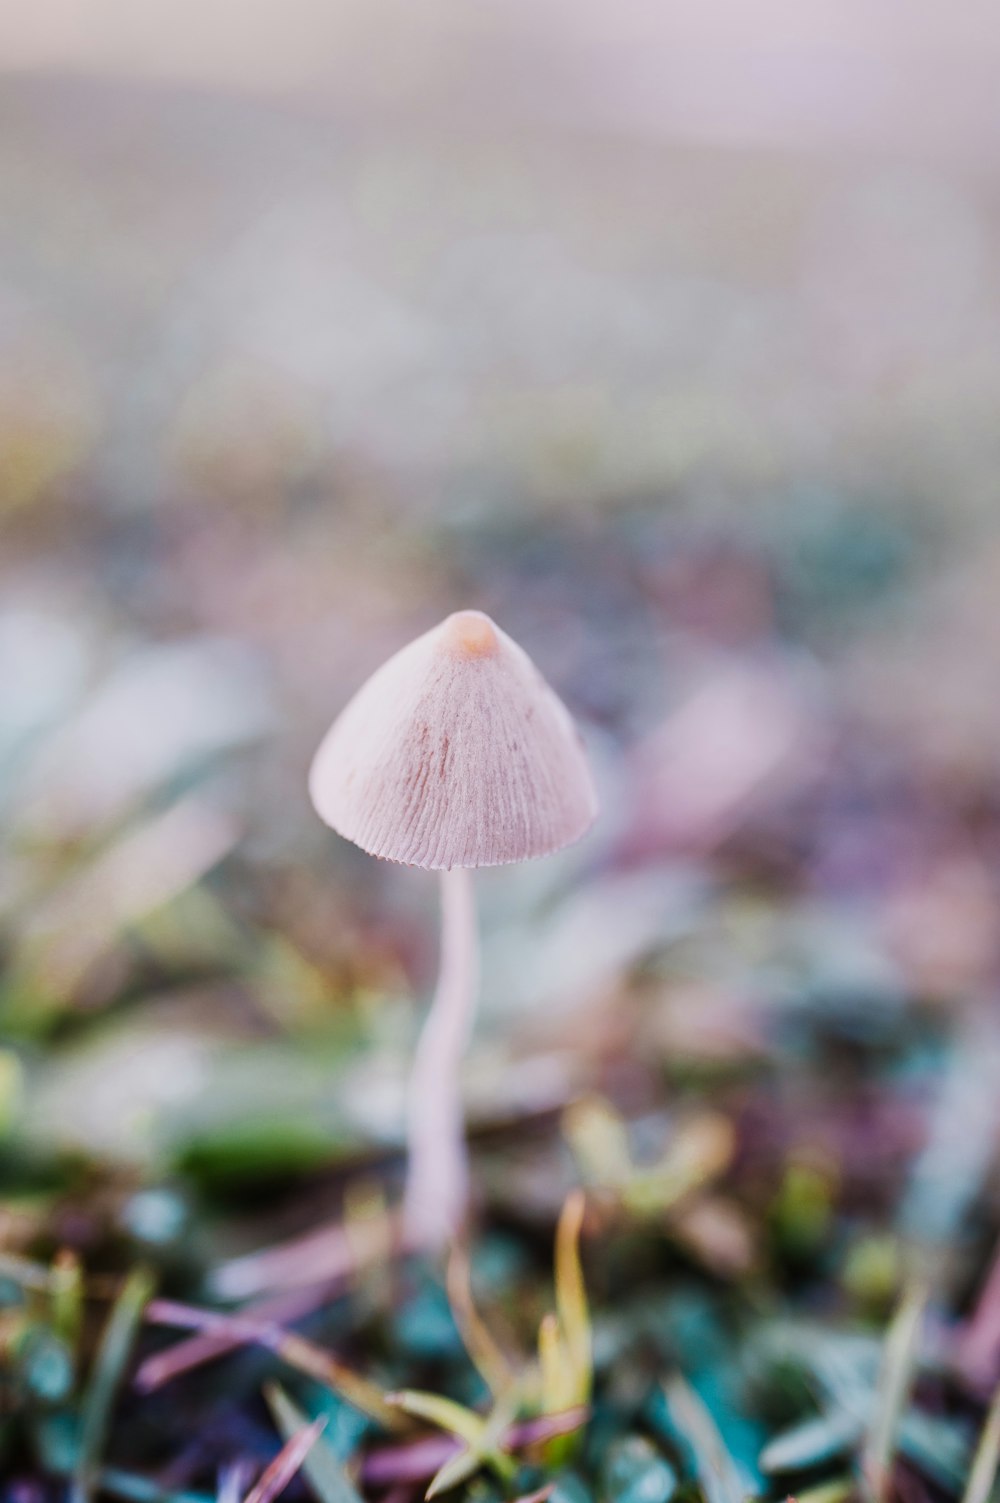 grey mushroom in selective-focus photography